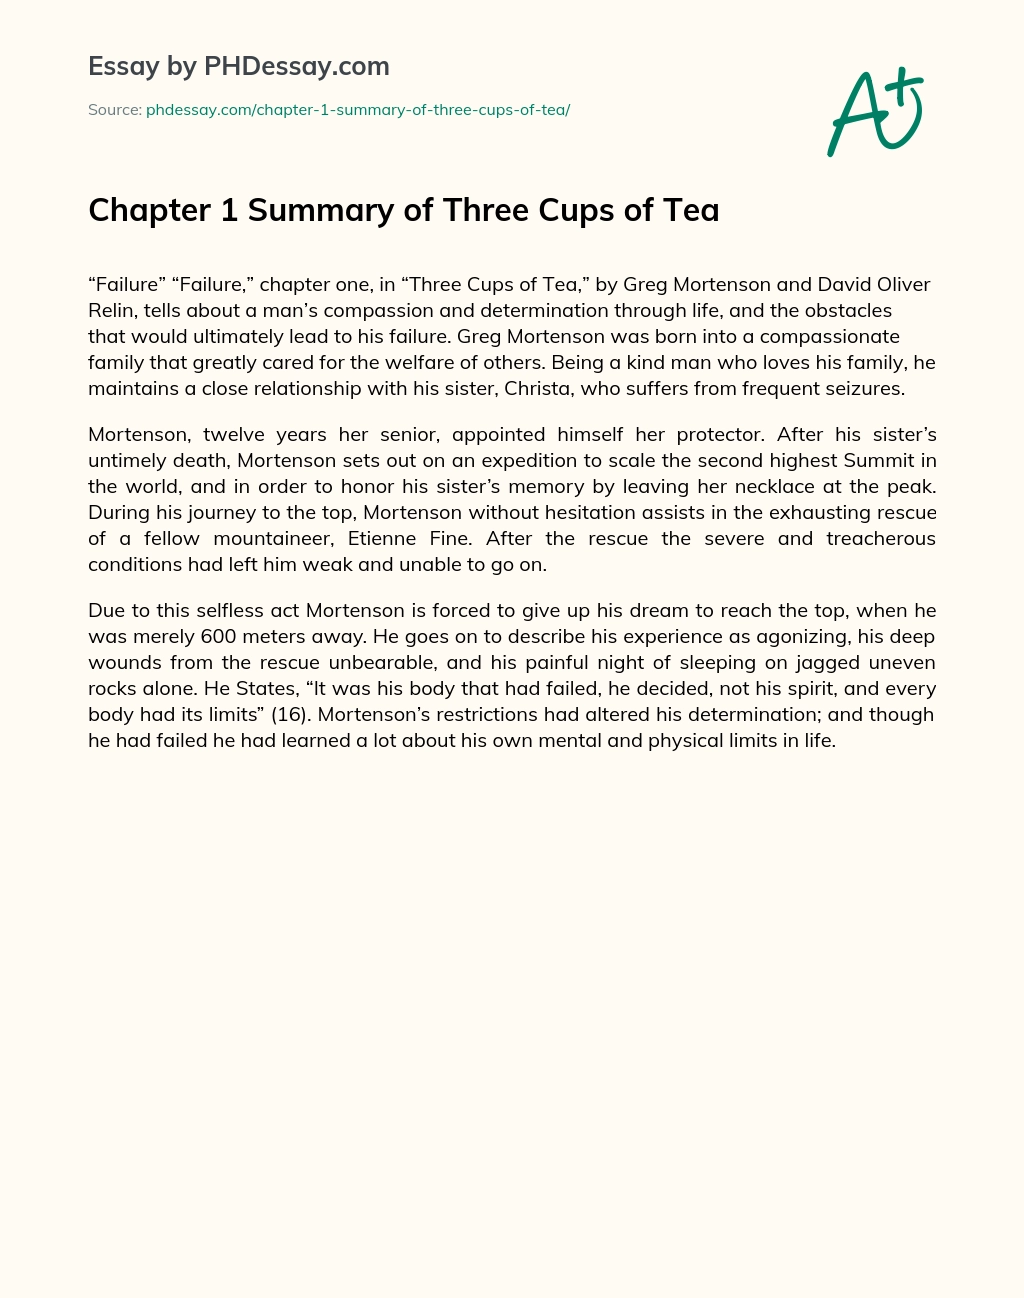 Chapter 1 Summary of Three Cups of Tea essay